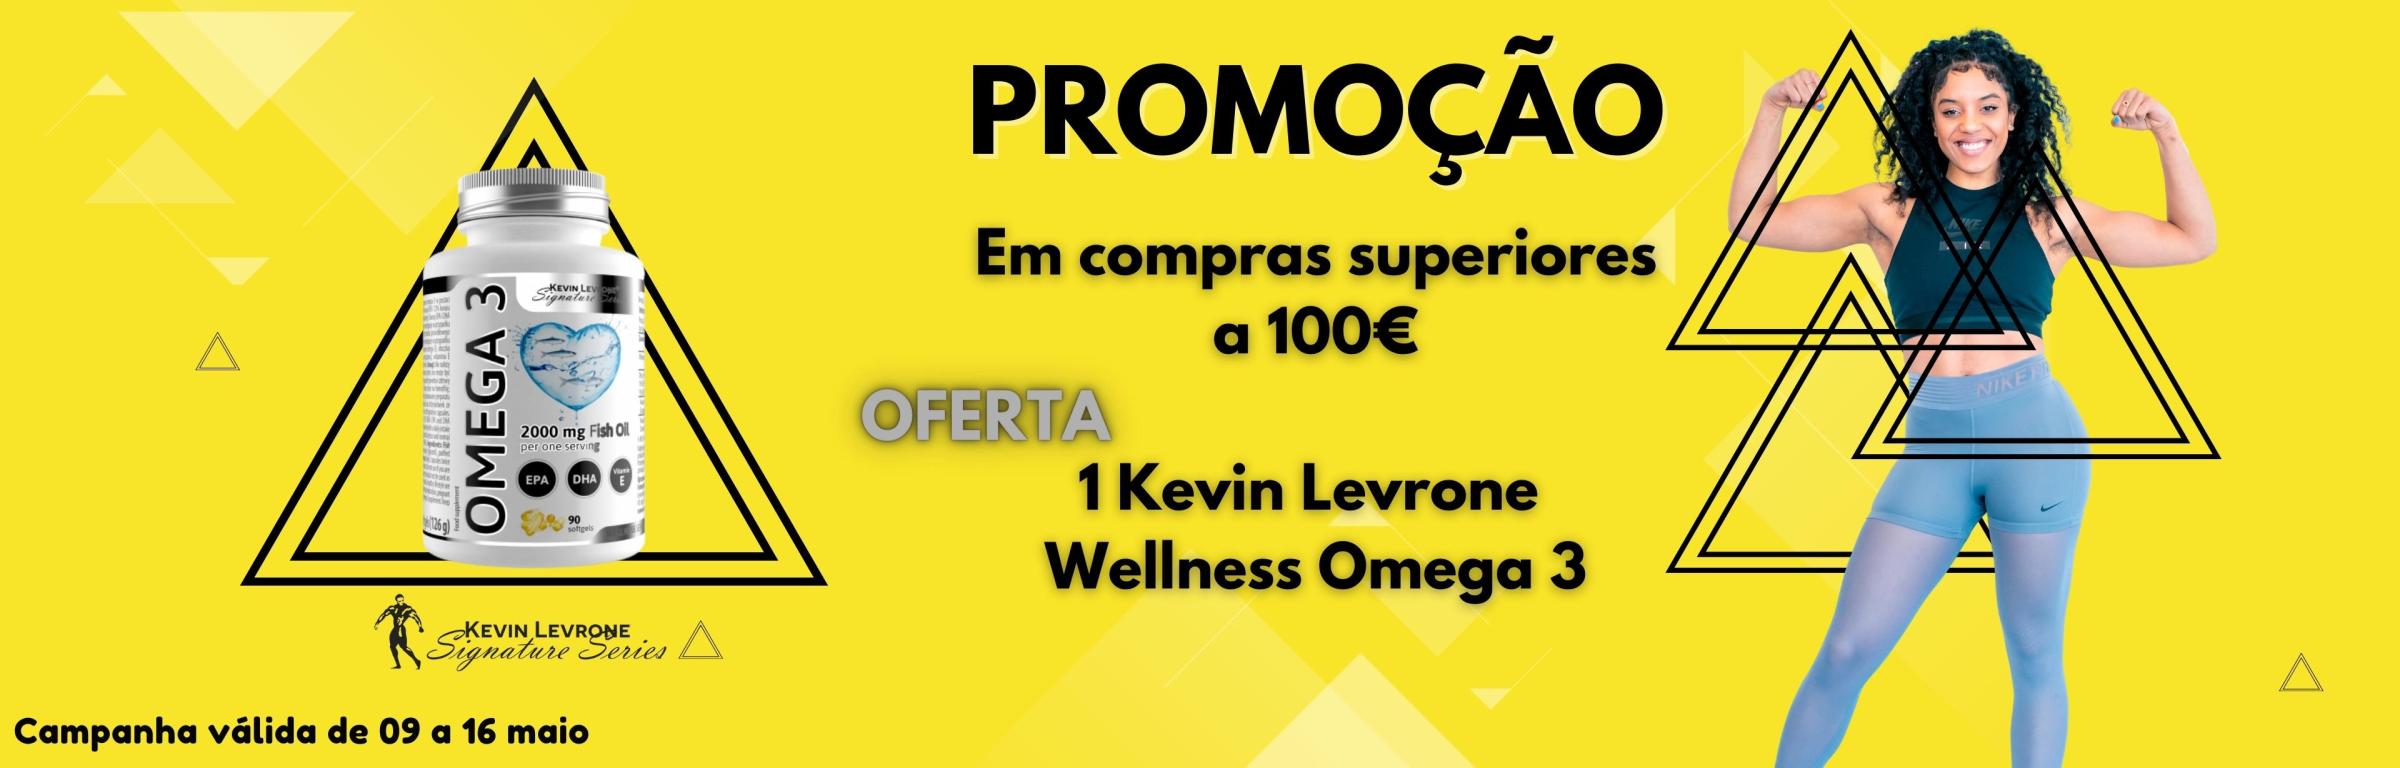 09 a 16 - compras superiores a 100€ oferta 1 Levrone Wellness Omega 3 - 09 a 16 de maio 2022 - Em compras superiores a 100€ oferta 1 Levrone Wellness Omega 3